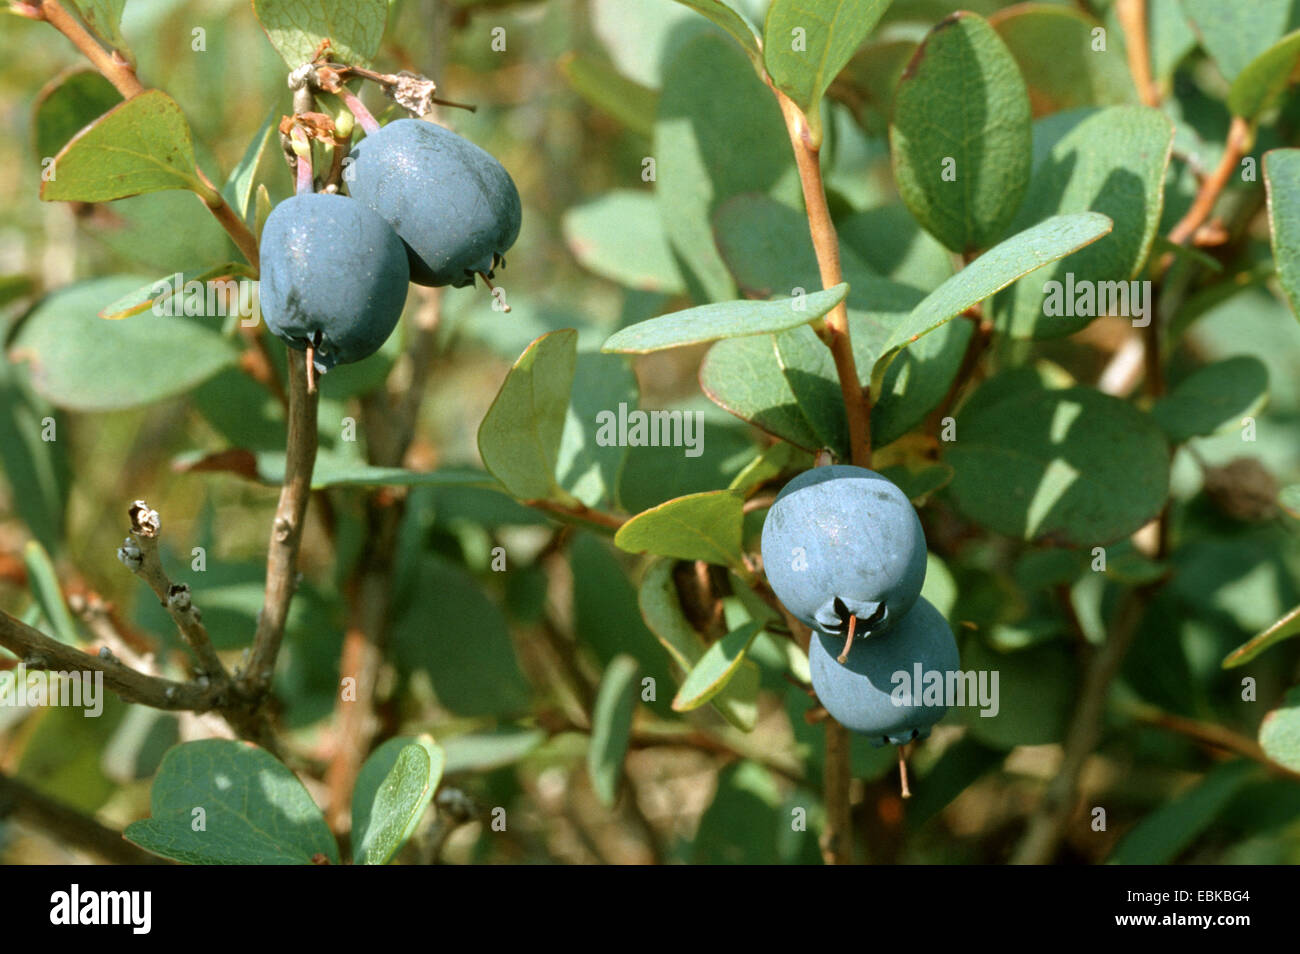 Alpine blueberry, bog blueberry, bog bilberry, northern bilberry, bog whortleberry (Vaccinium uliginosum), branches with ripe fruits, Germany Stock Photo